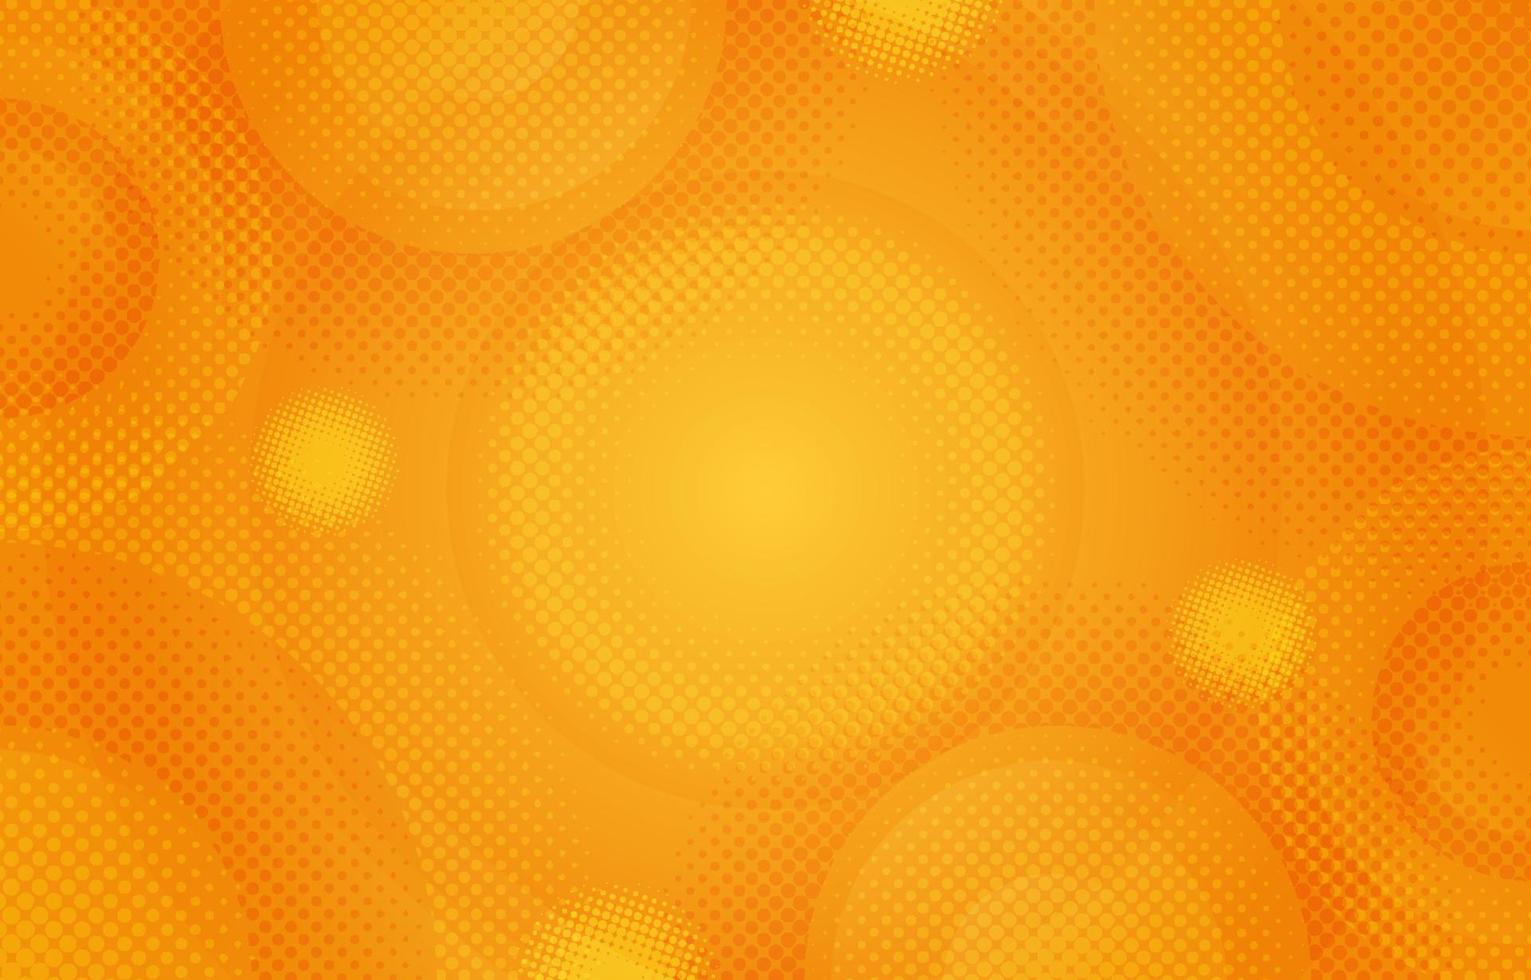 Abstract Orange Halftone Background vector